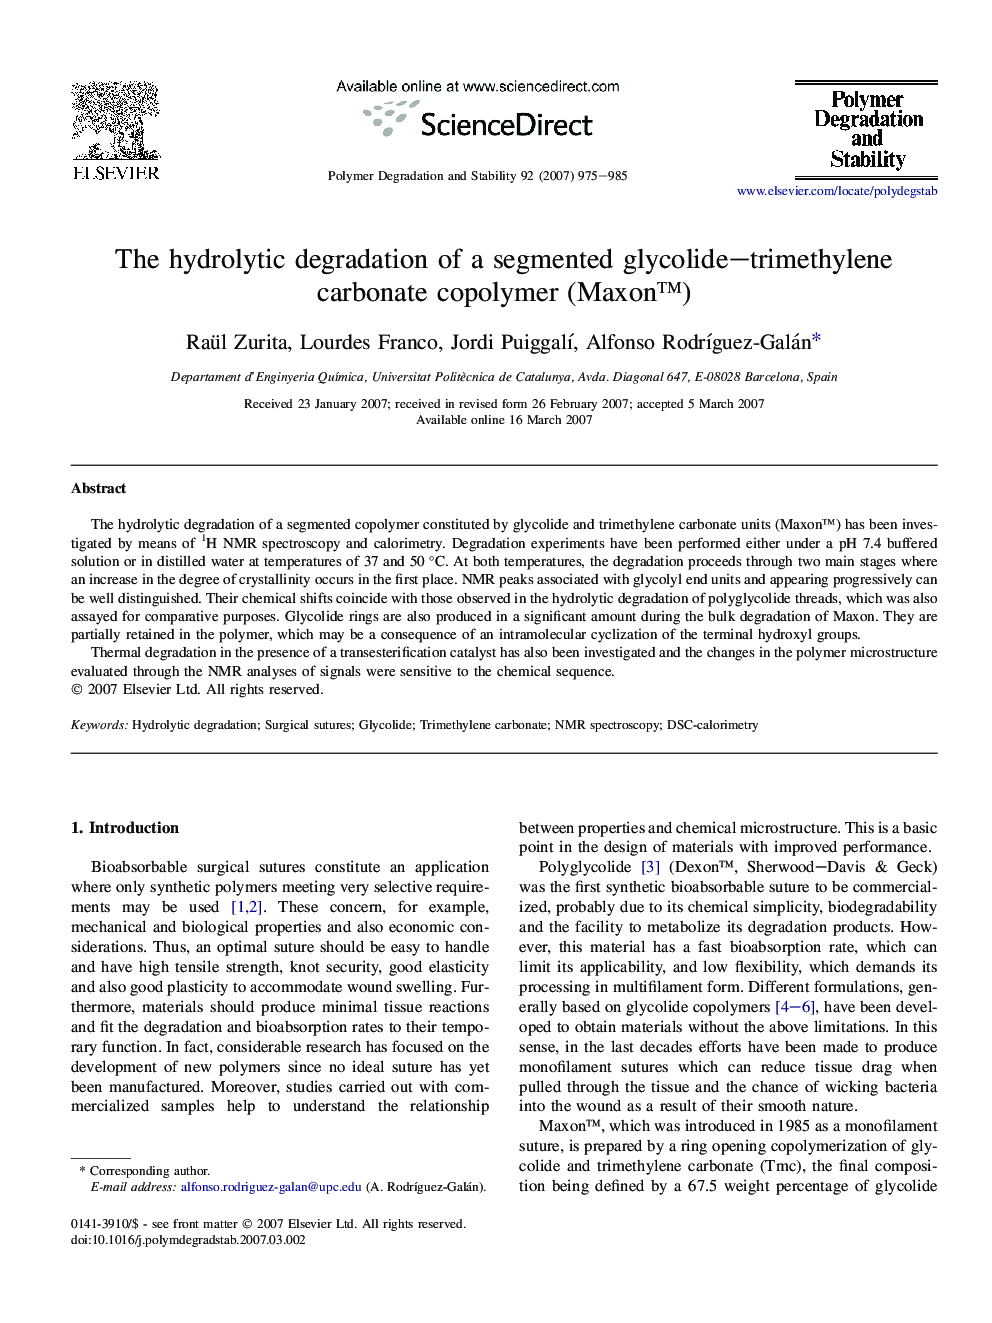 The hydrolytic degradation of a segmented glycolide-trimethylene carbonate copolymer (Maxonâ¢)